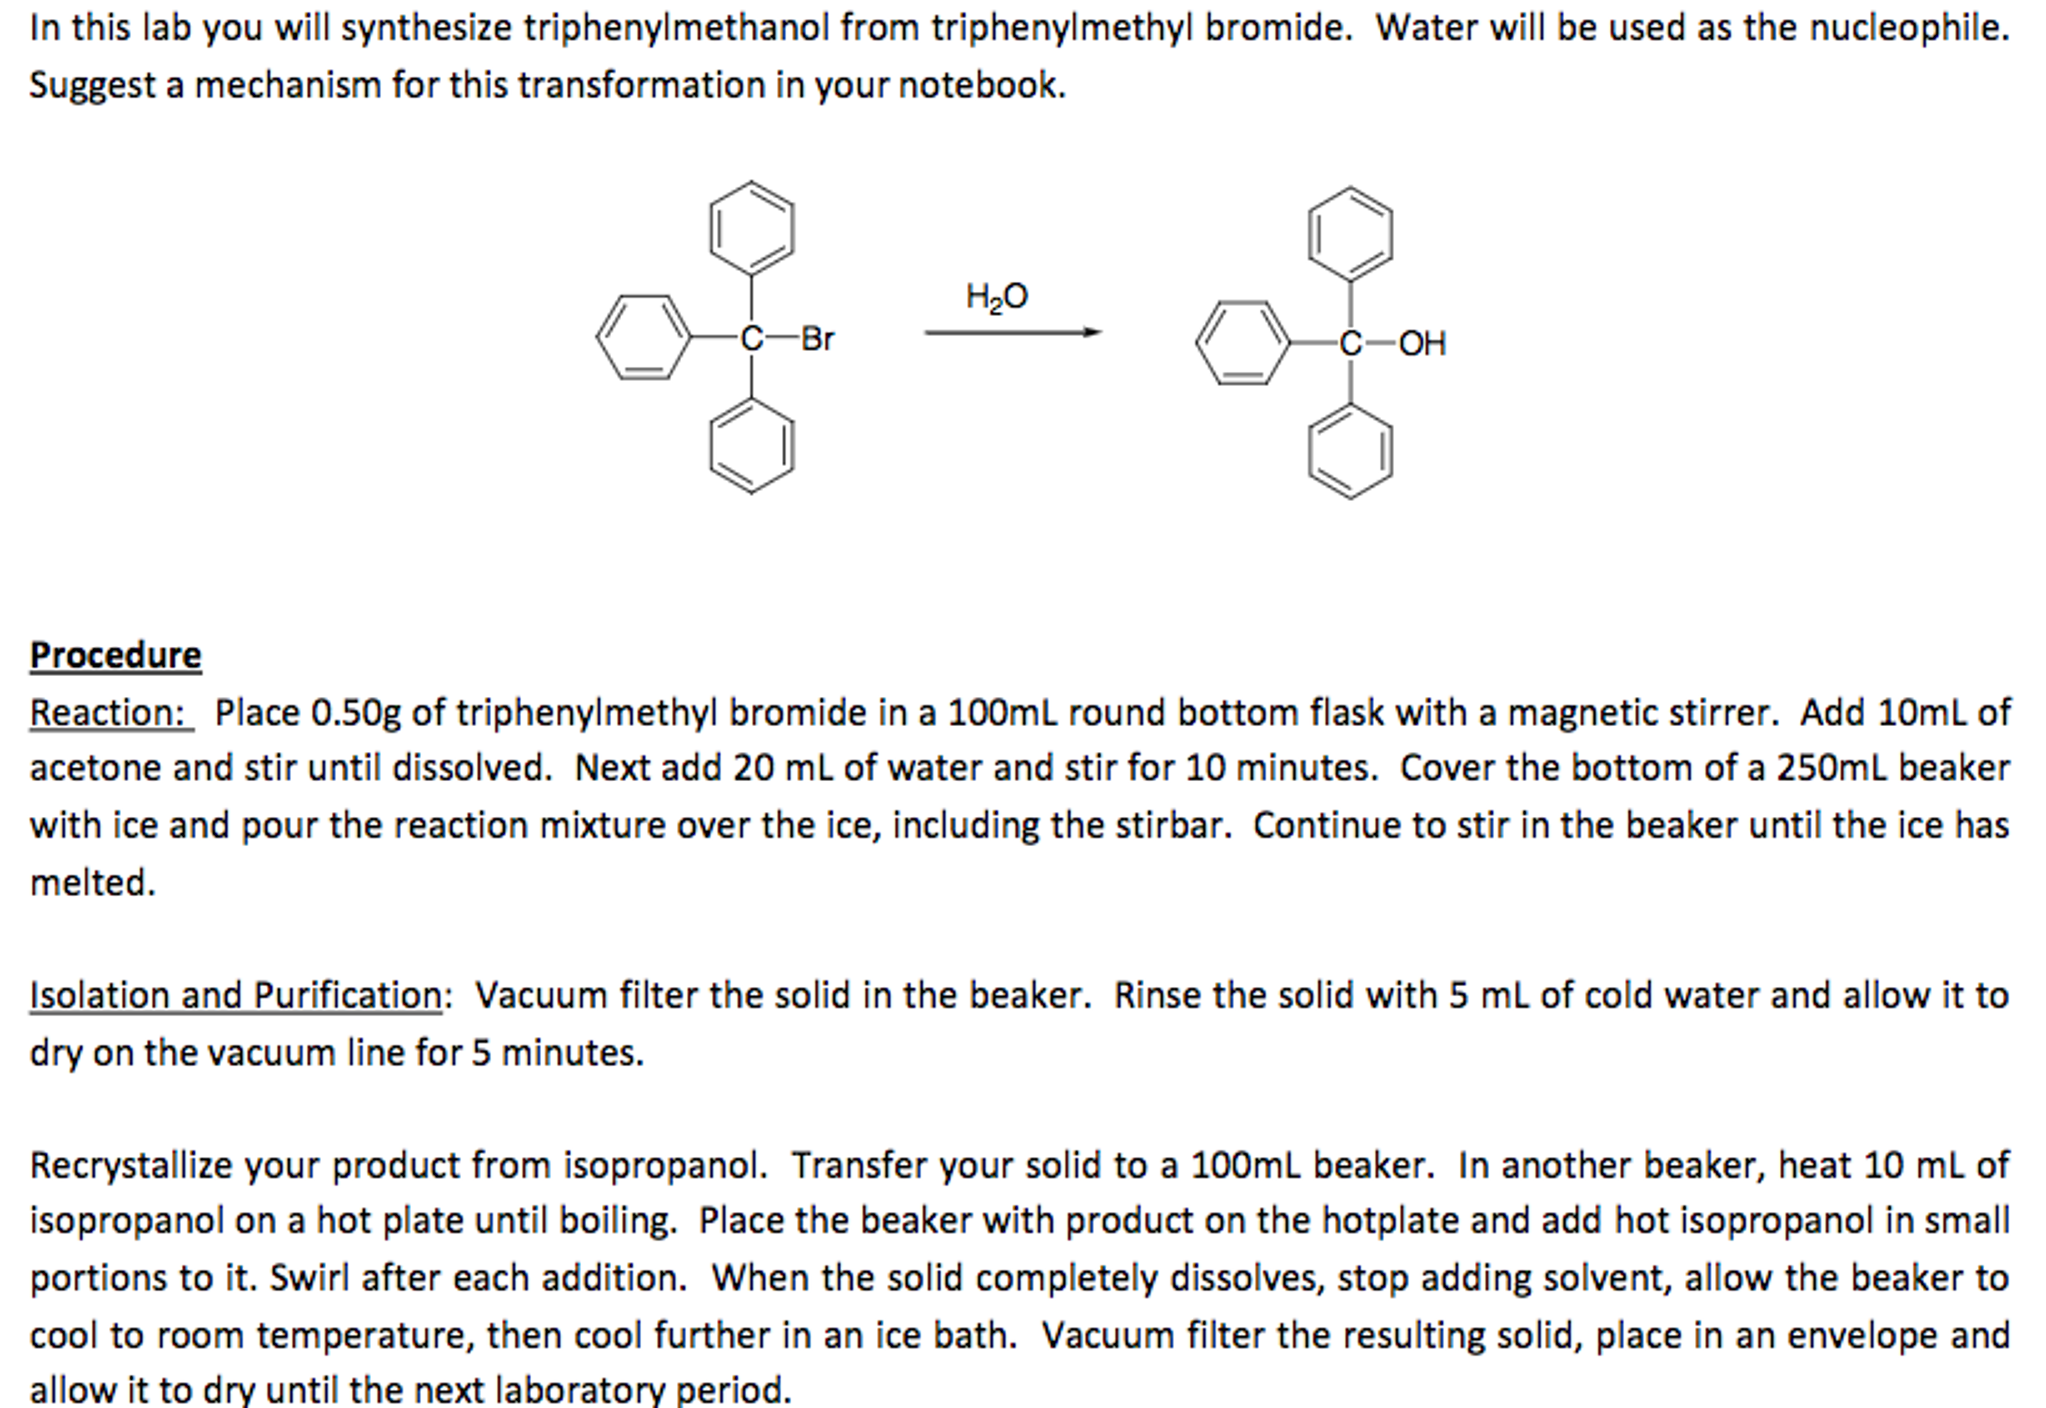 grignard reaction synthesis of triphenylmethanol lab report